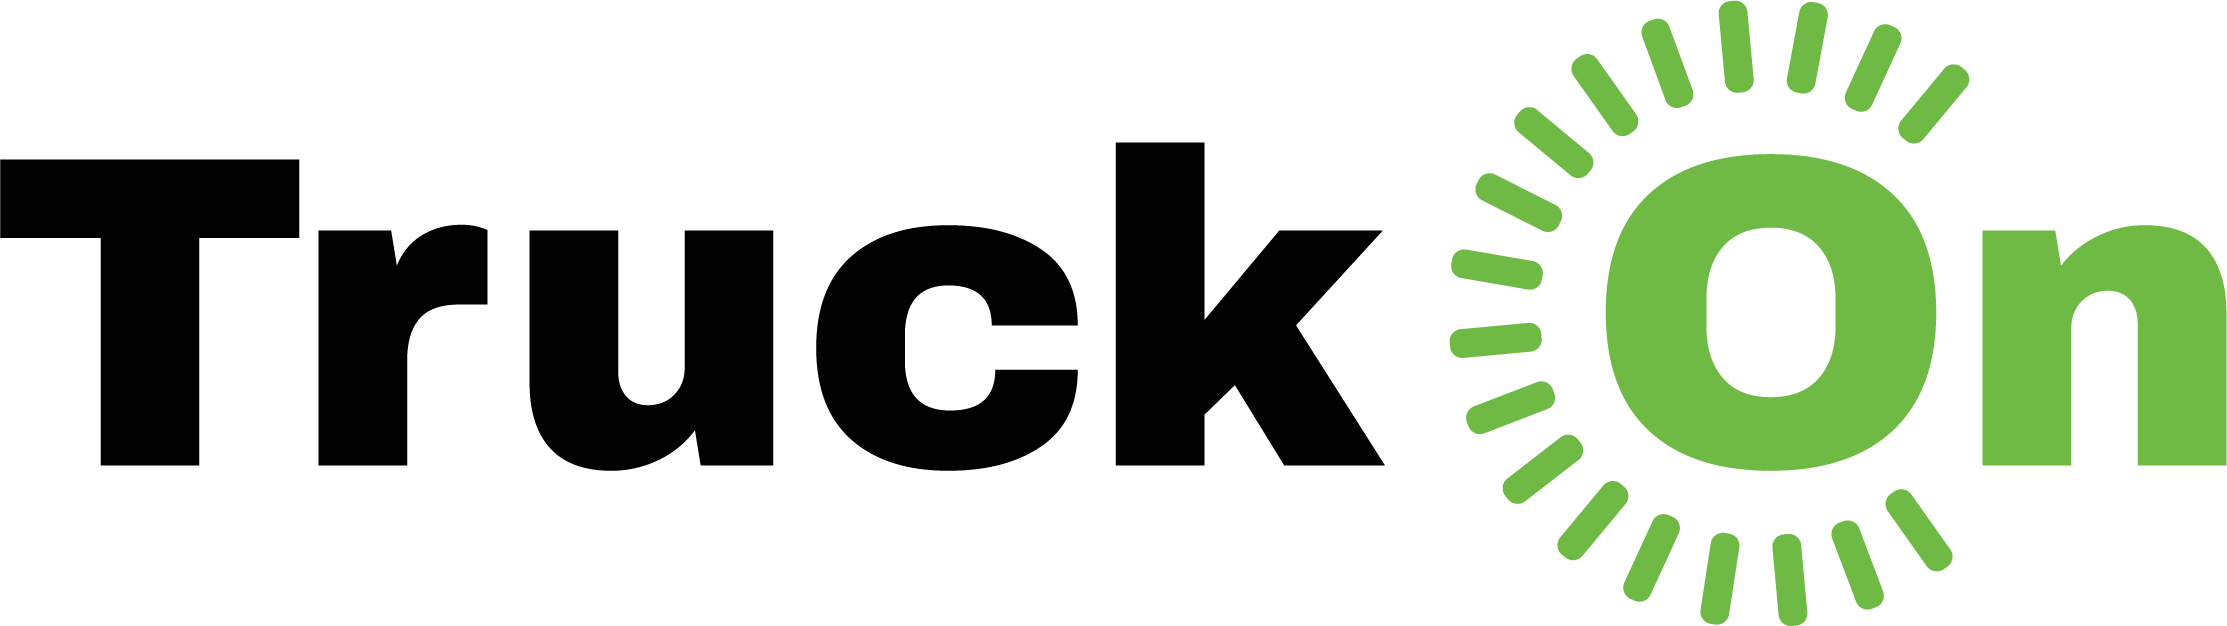 Truckon Logo